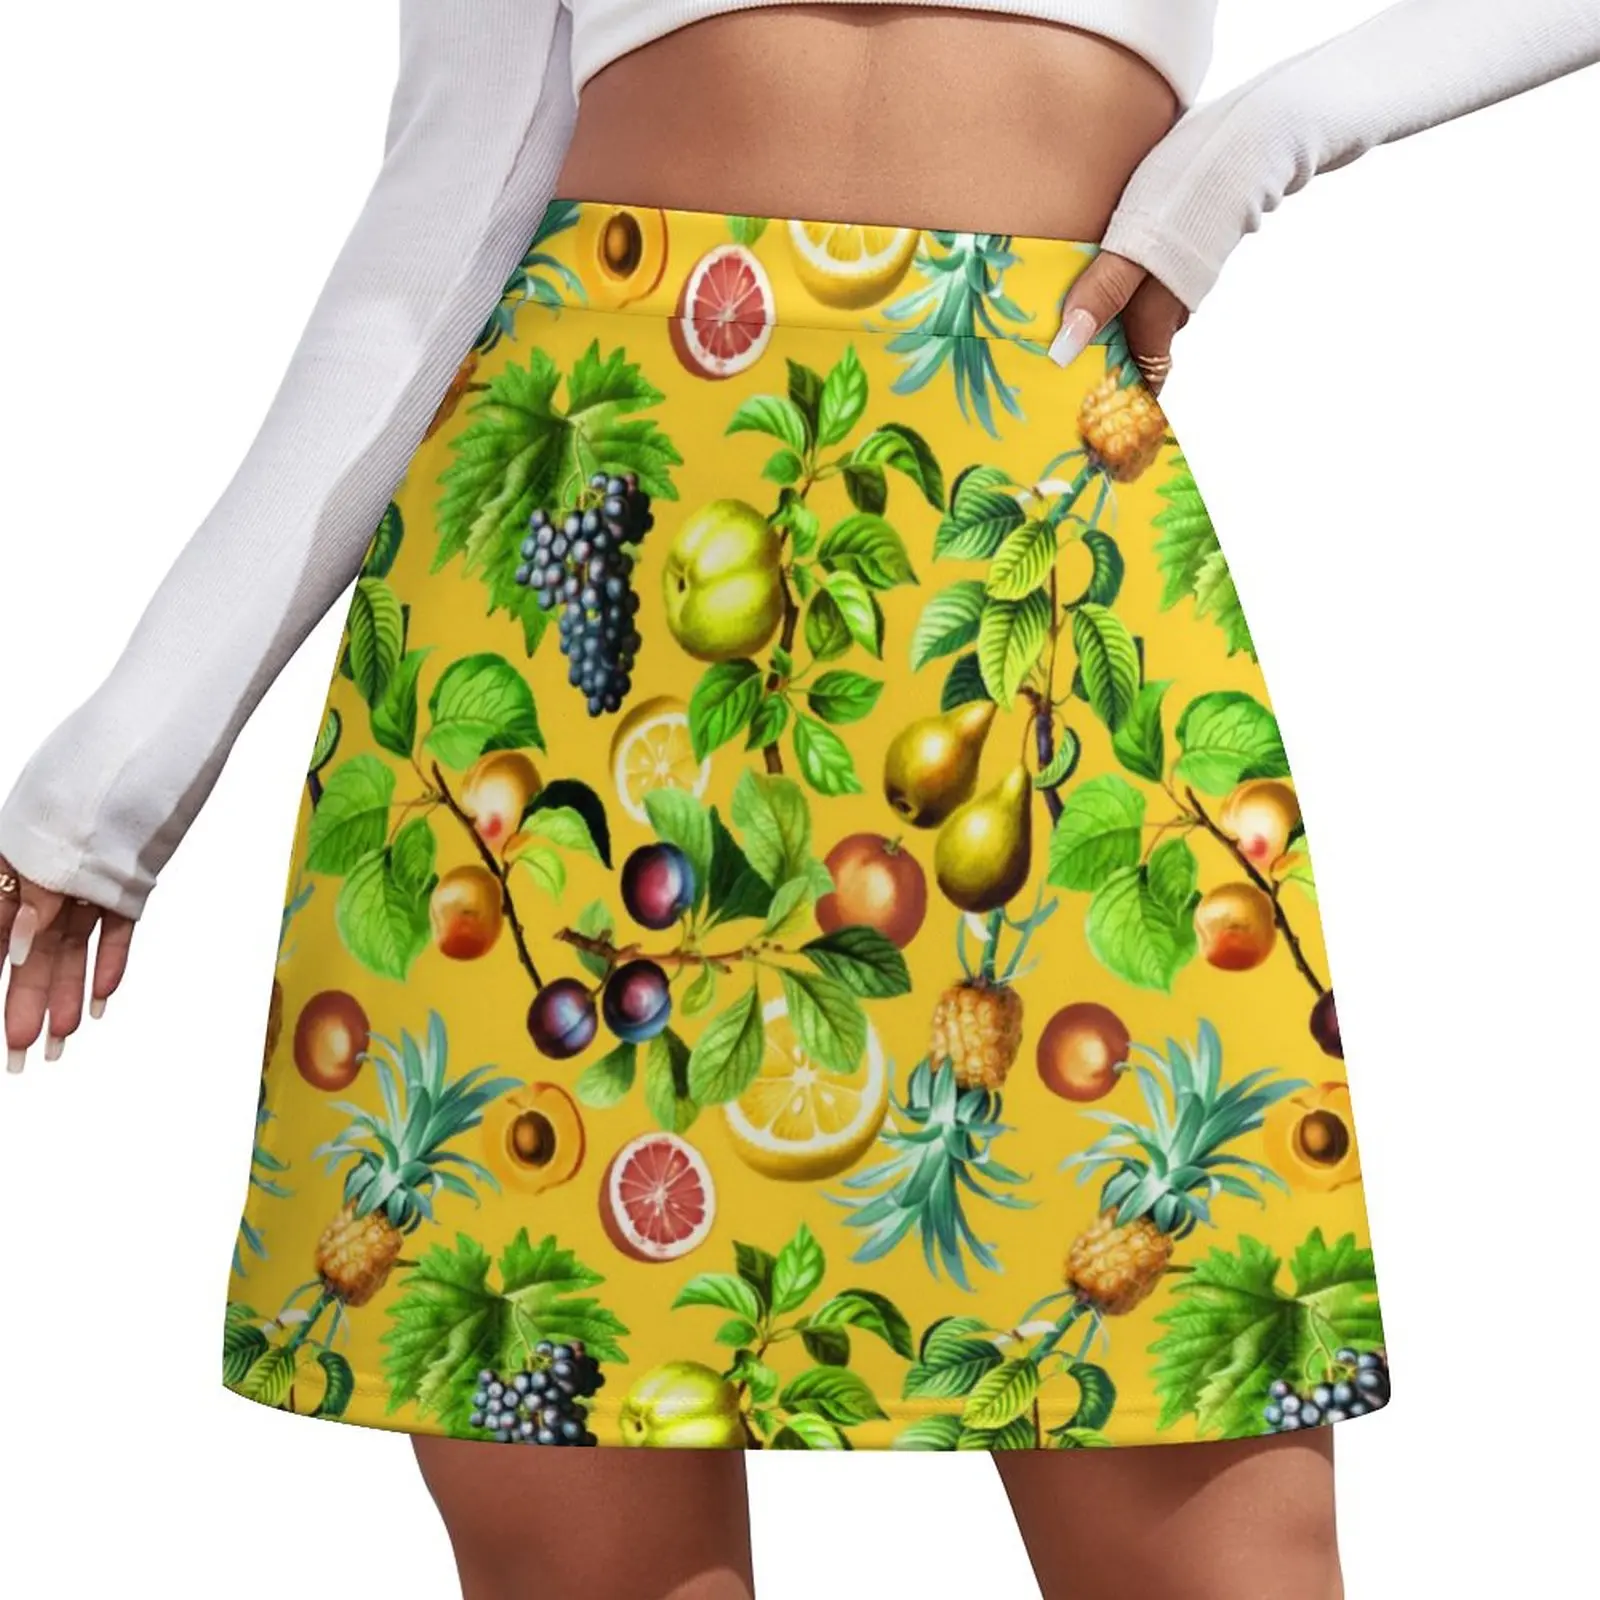 

Pineapple Skirt Tropical Fruit Print Korean Fashion Casual Skirts Woman Cute Mini Skirt Custom Bottoms Gift Idea